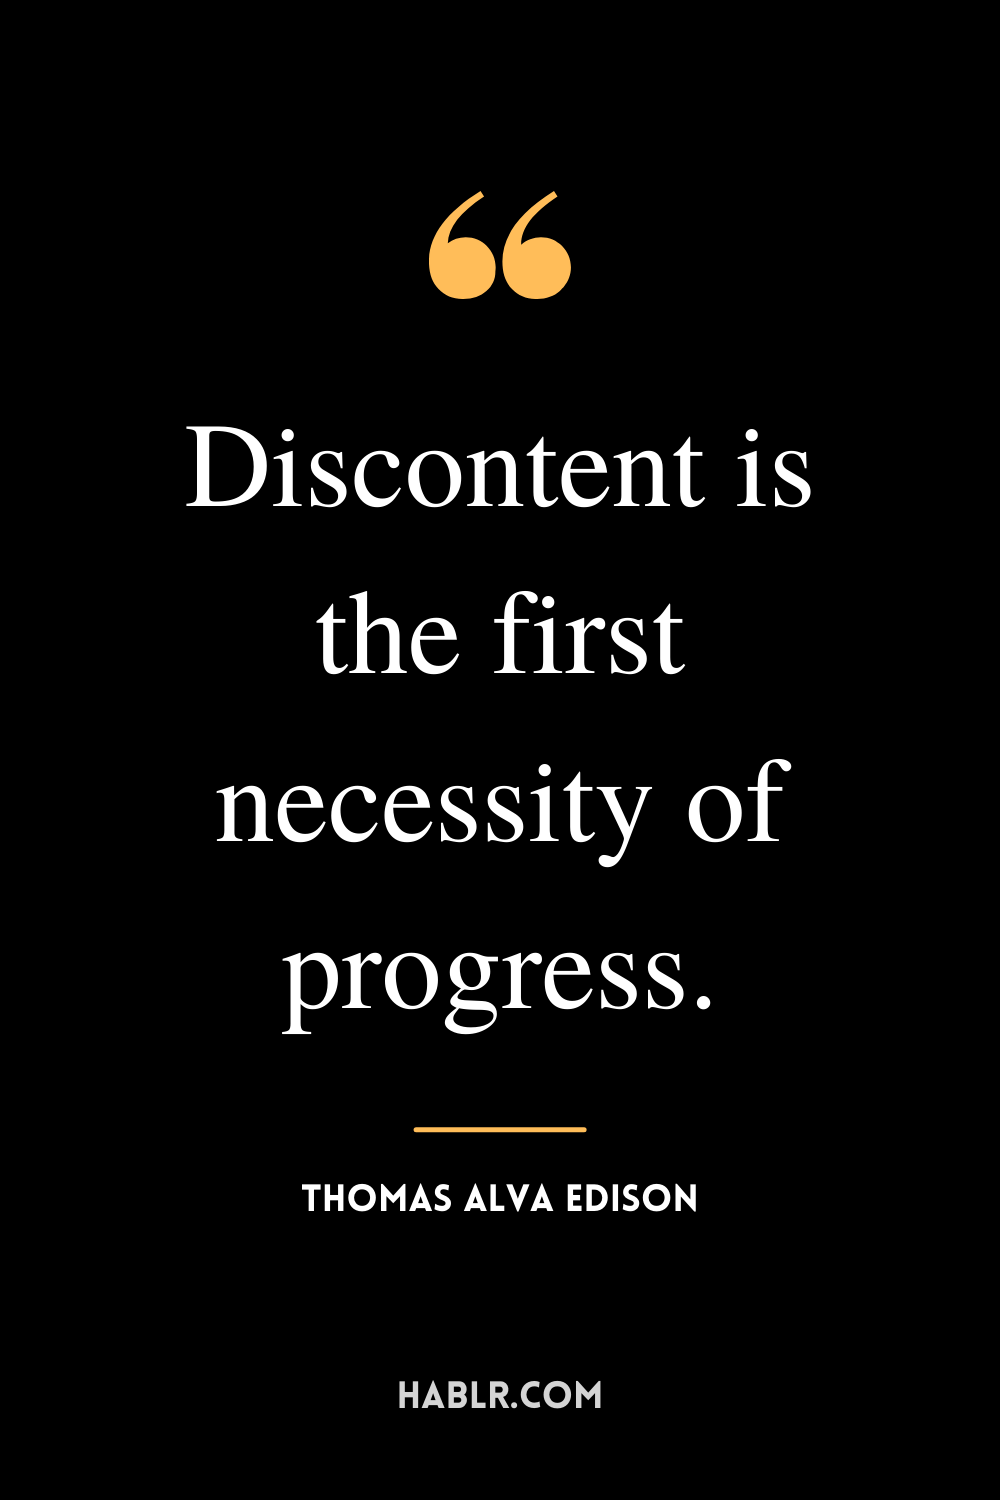 “Discontent is the first necessity of progress.” -Thomas Alva Edison